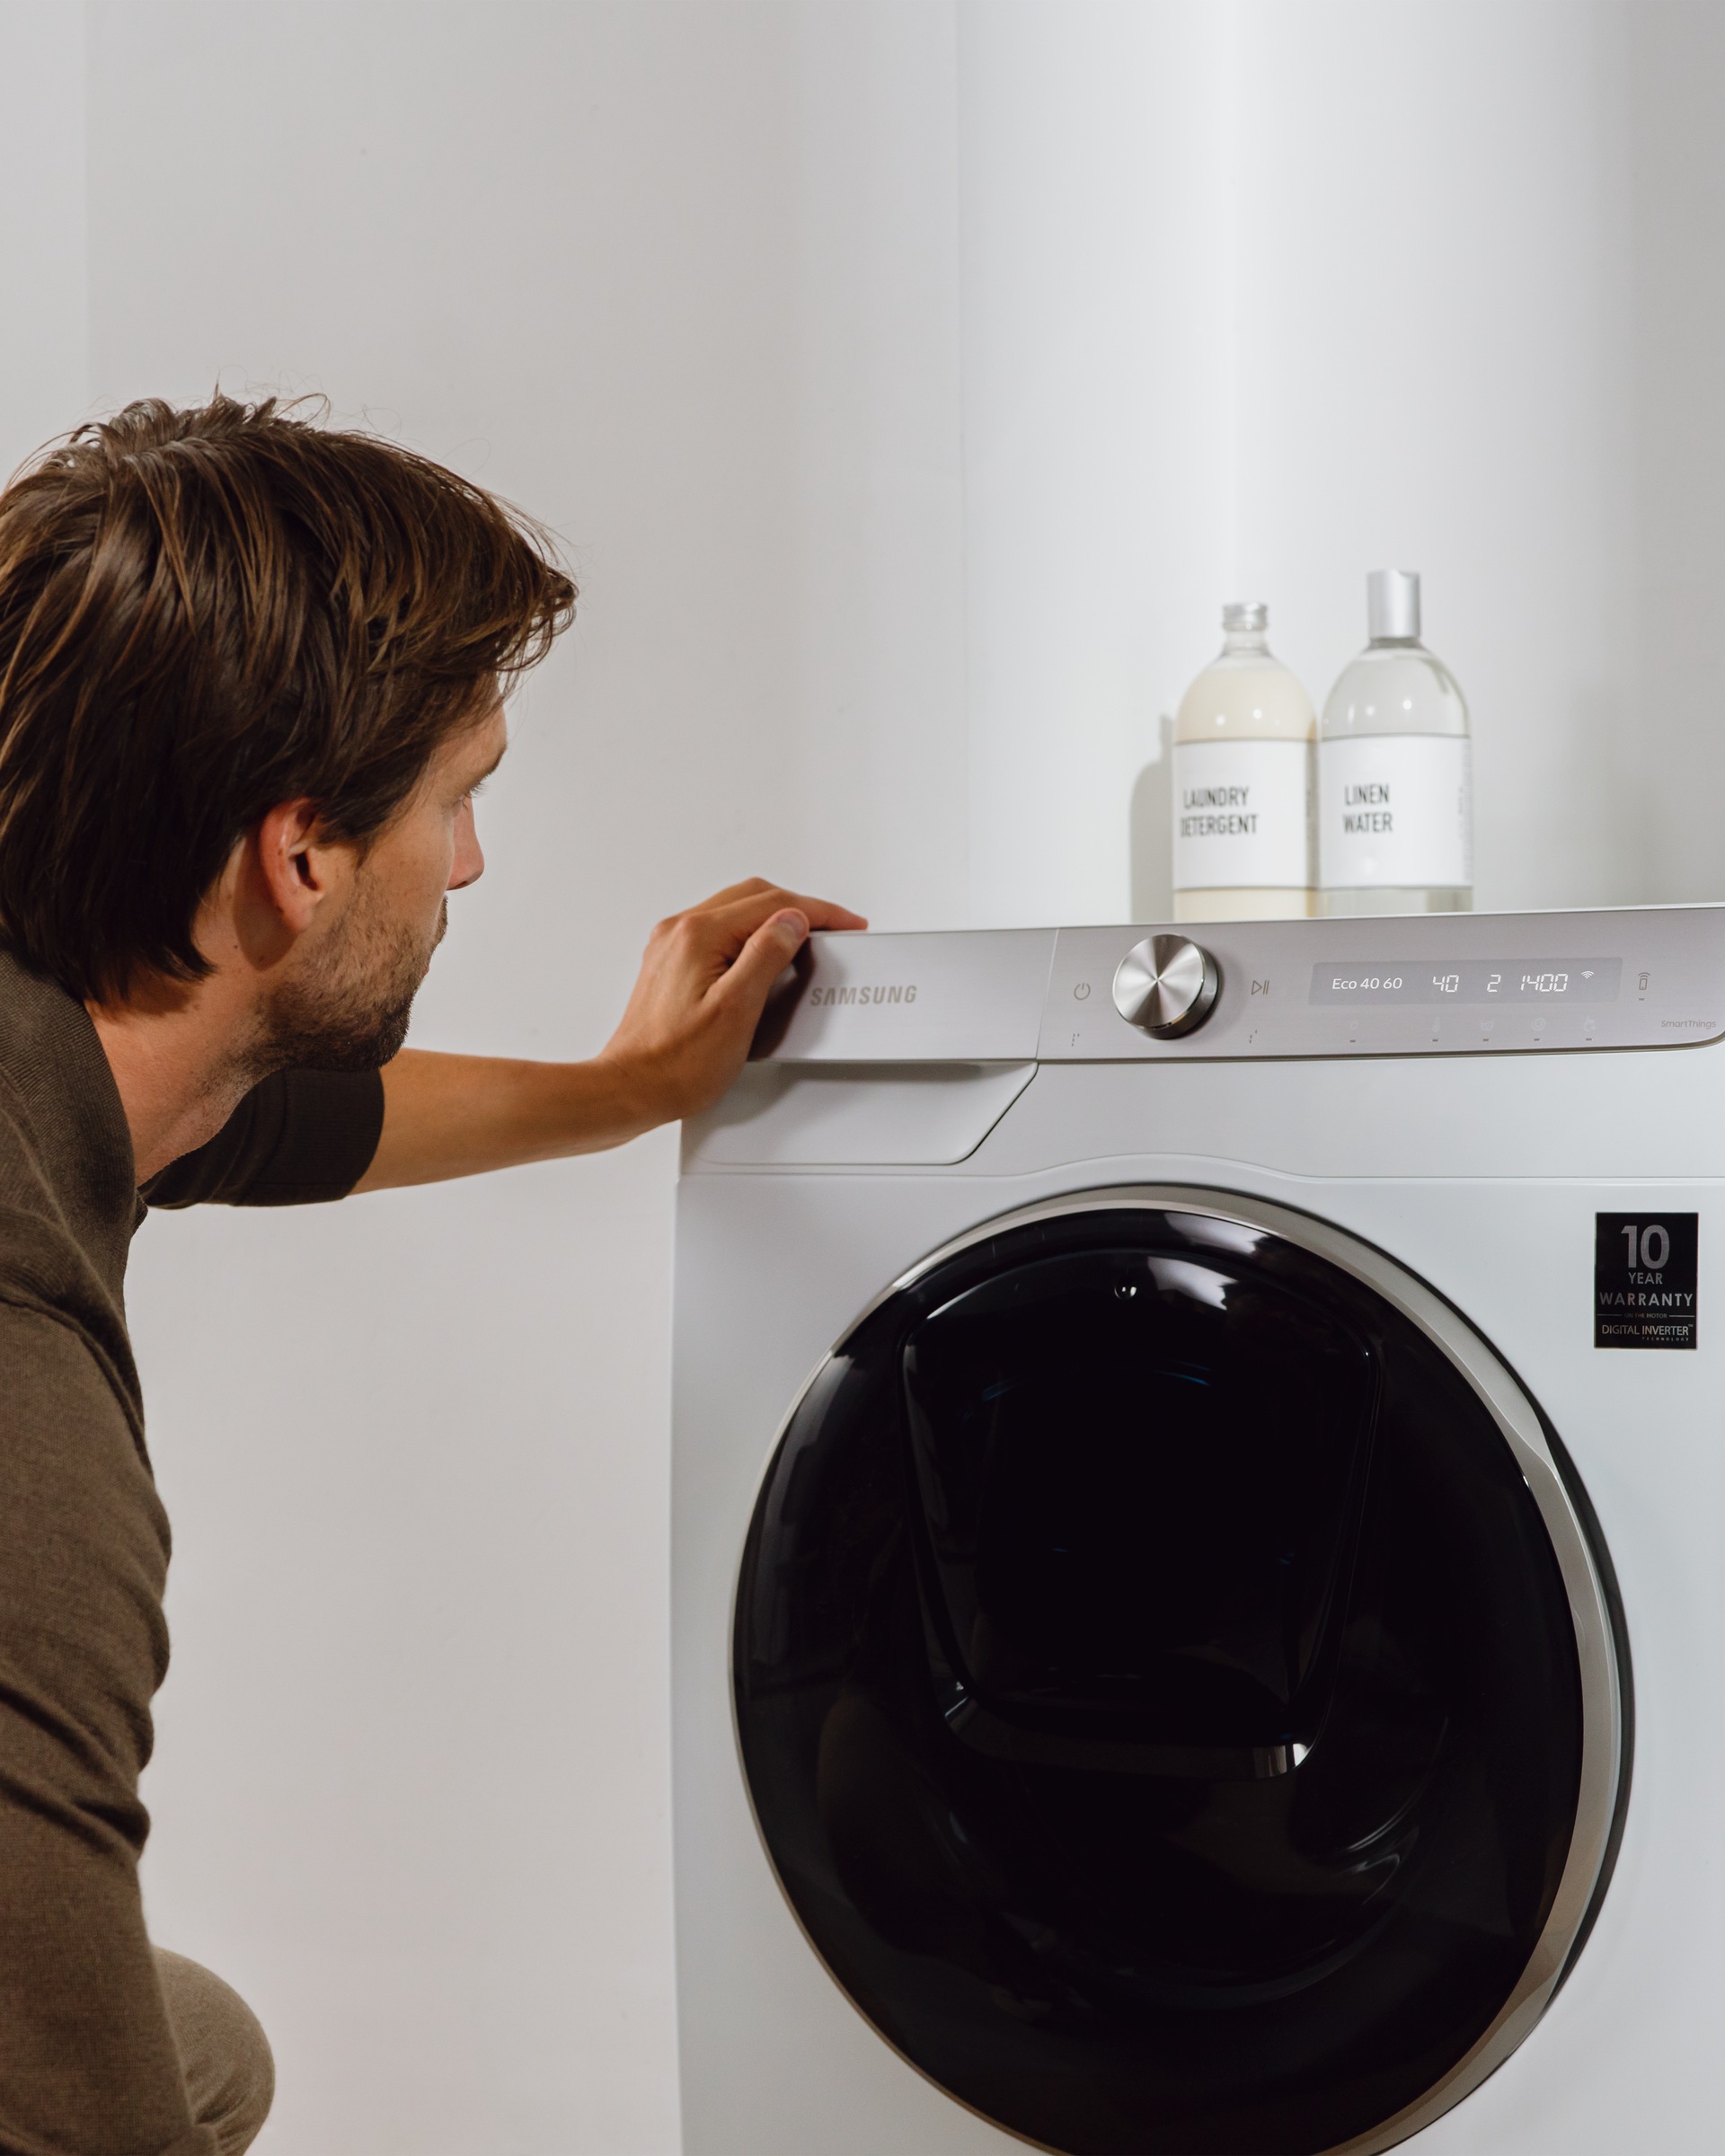 Zuiniger met een slimme wasmachine | Samsung NL